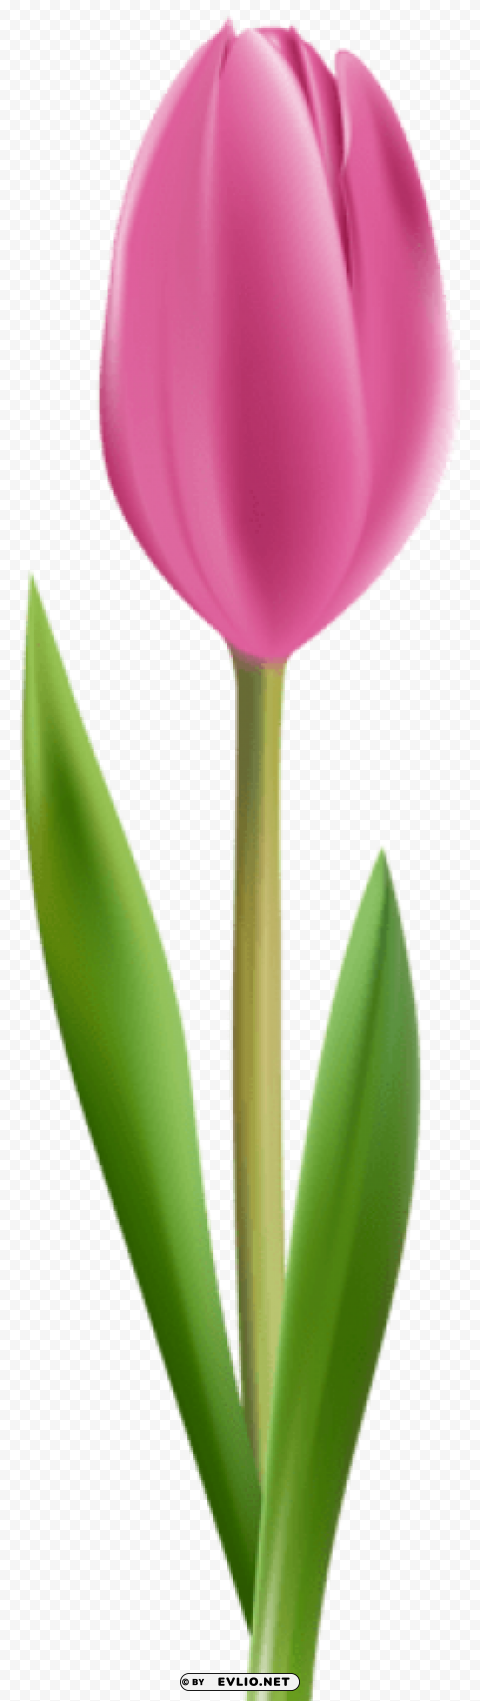 pink tulip HighResolution Transparent PNG Isolation